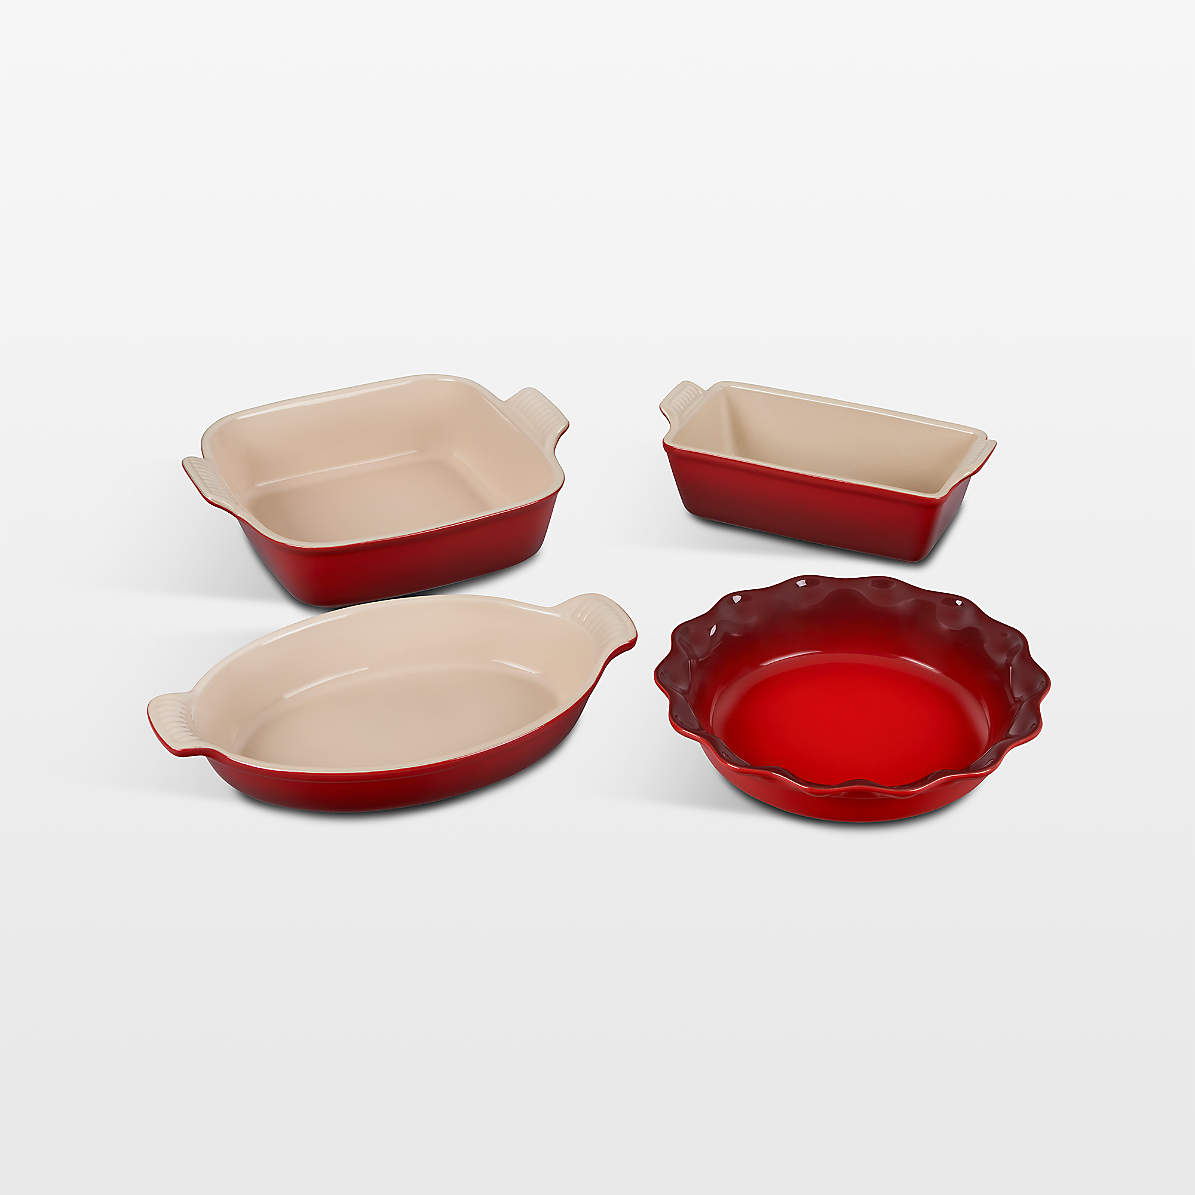 Le Creuset Heritage 2-Piece Square Cerise Red Ceramic Baking Dish Set +  Reviews